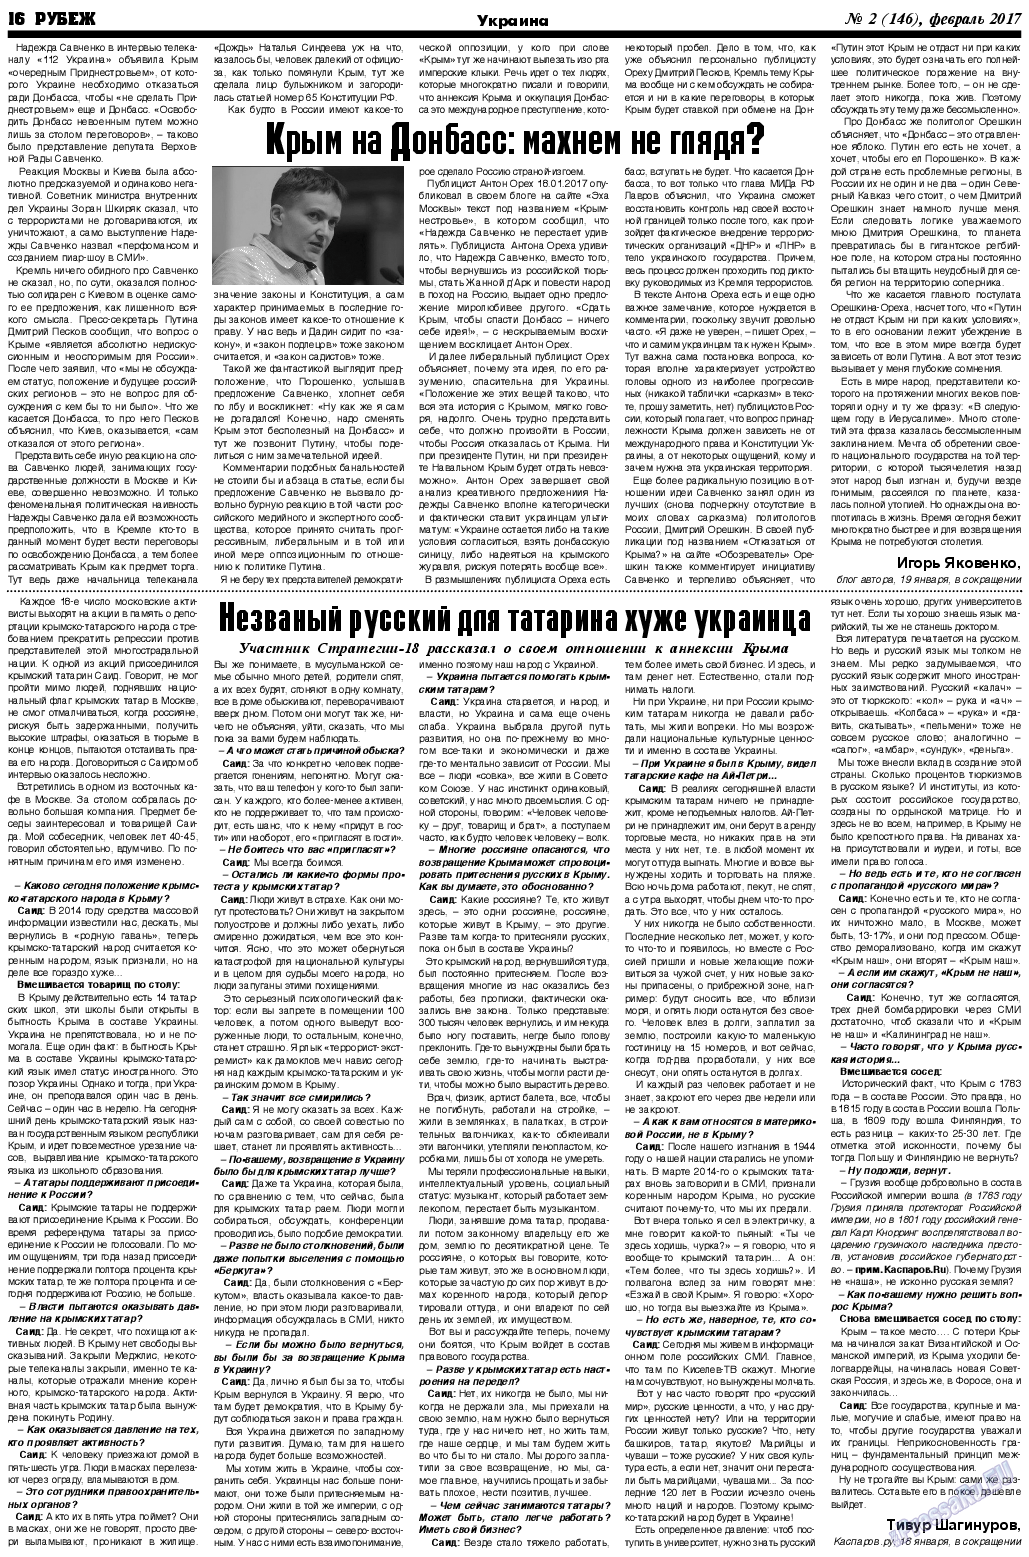 Рубеж, газета. 2017 №2 стр.16